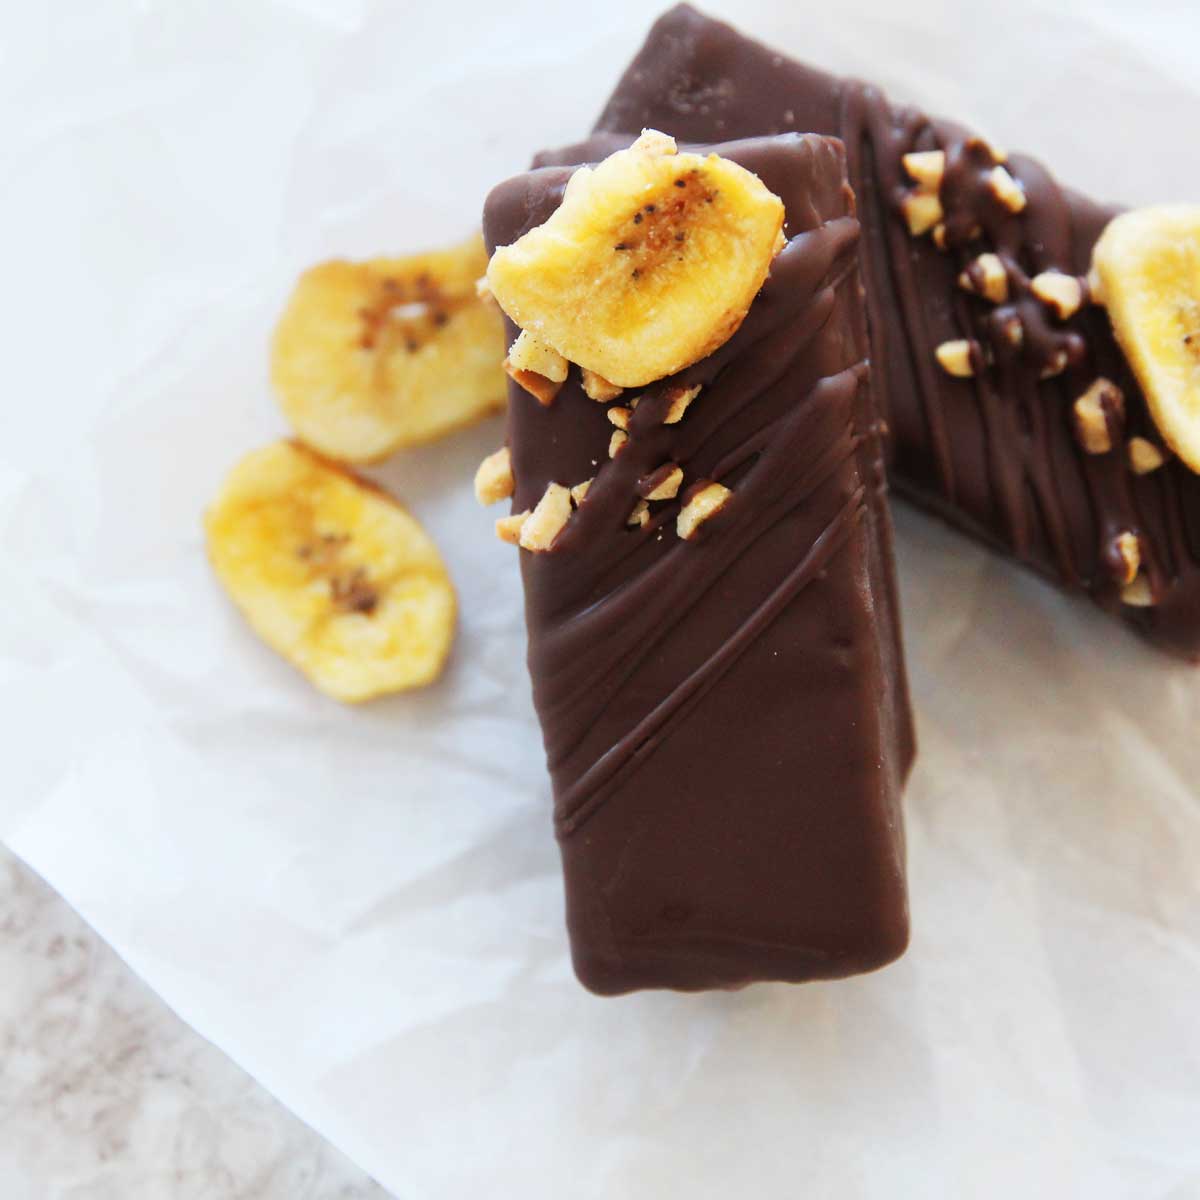 Homemade Chocolate & Banana Protein Bars Recipe - Banana Protein Bars